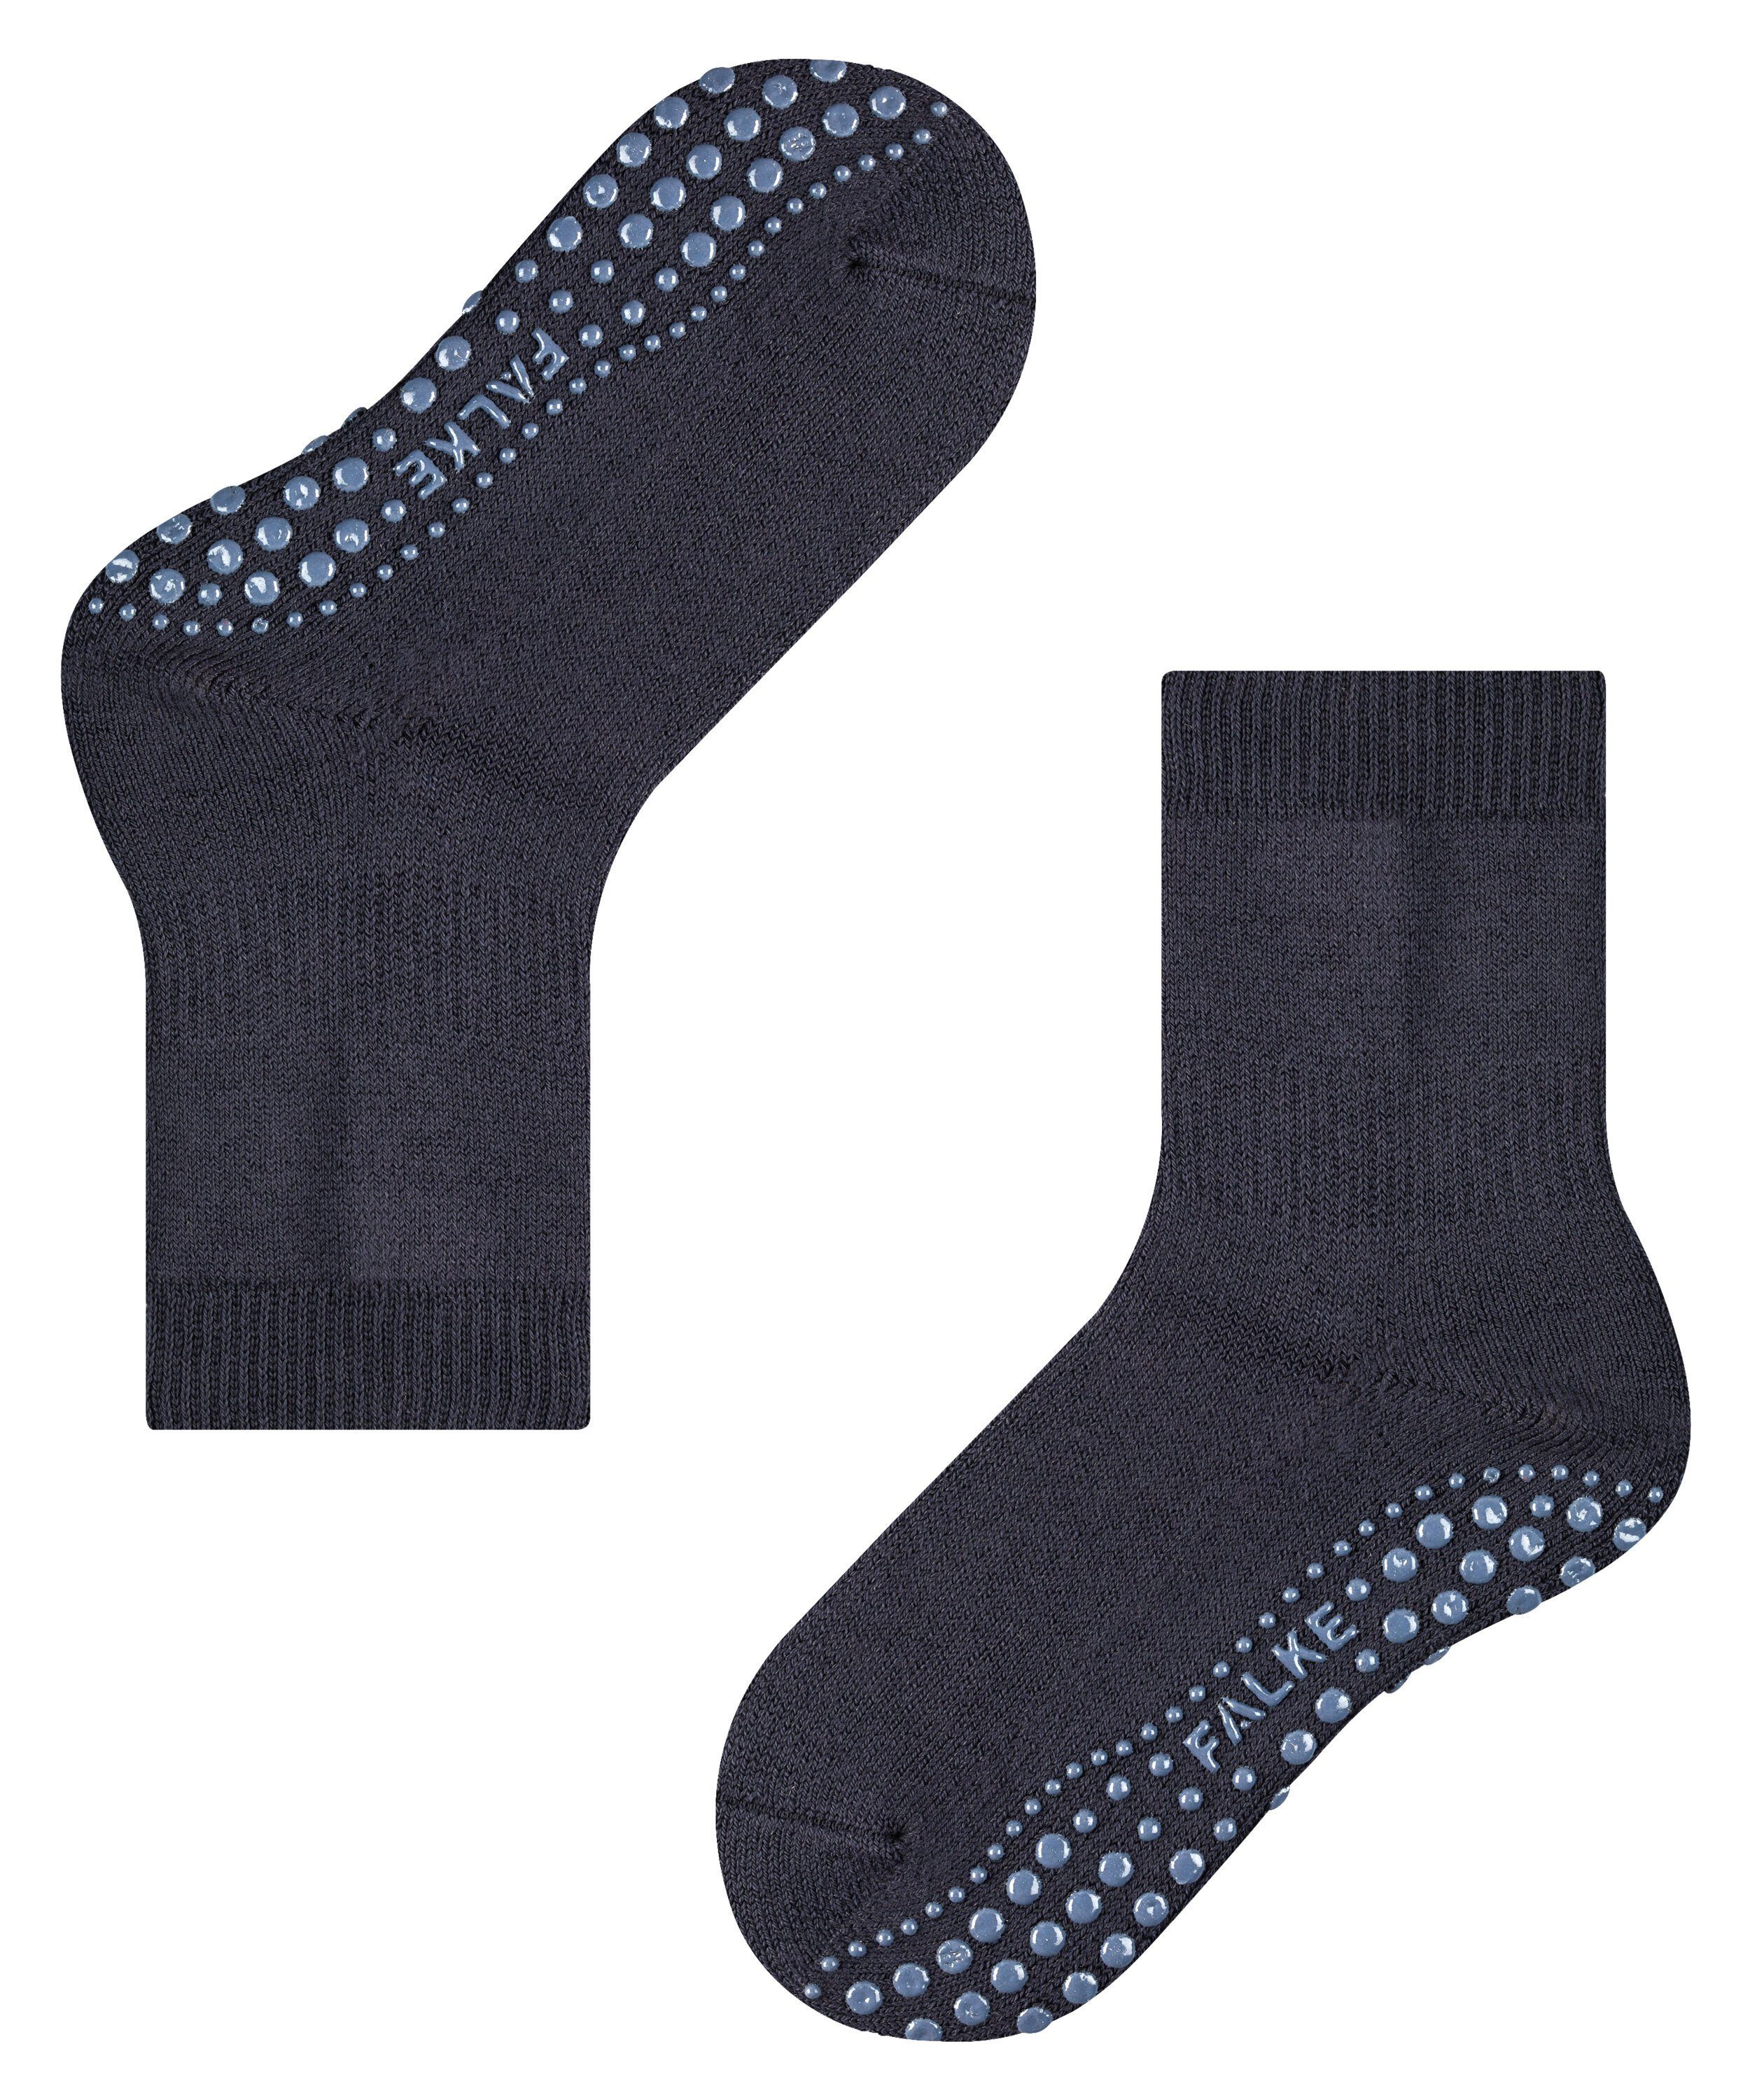 Catspads (6170) darkmarine FALKE (1-Paar) Socken